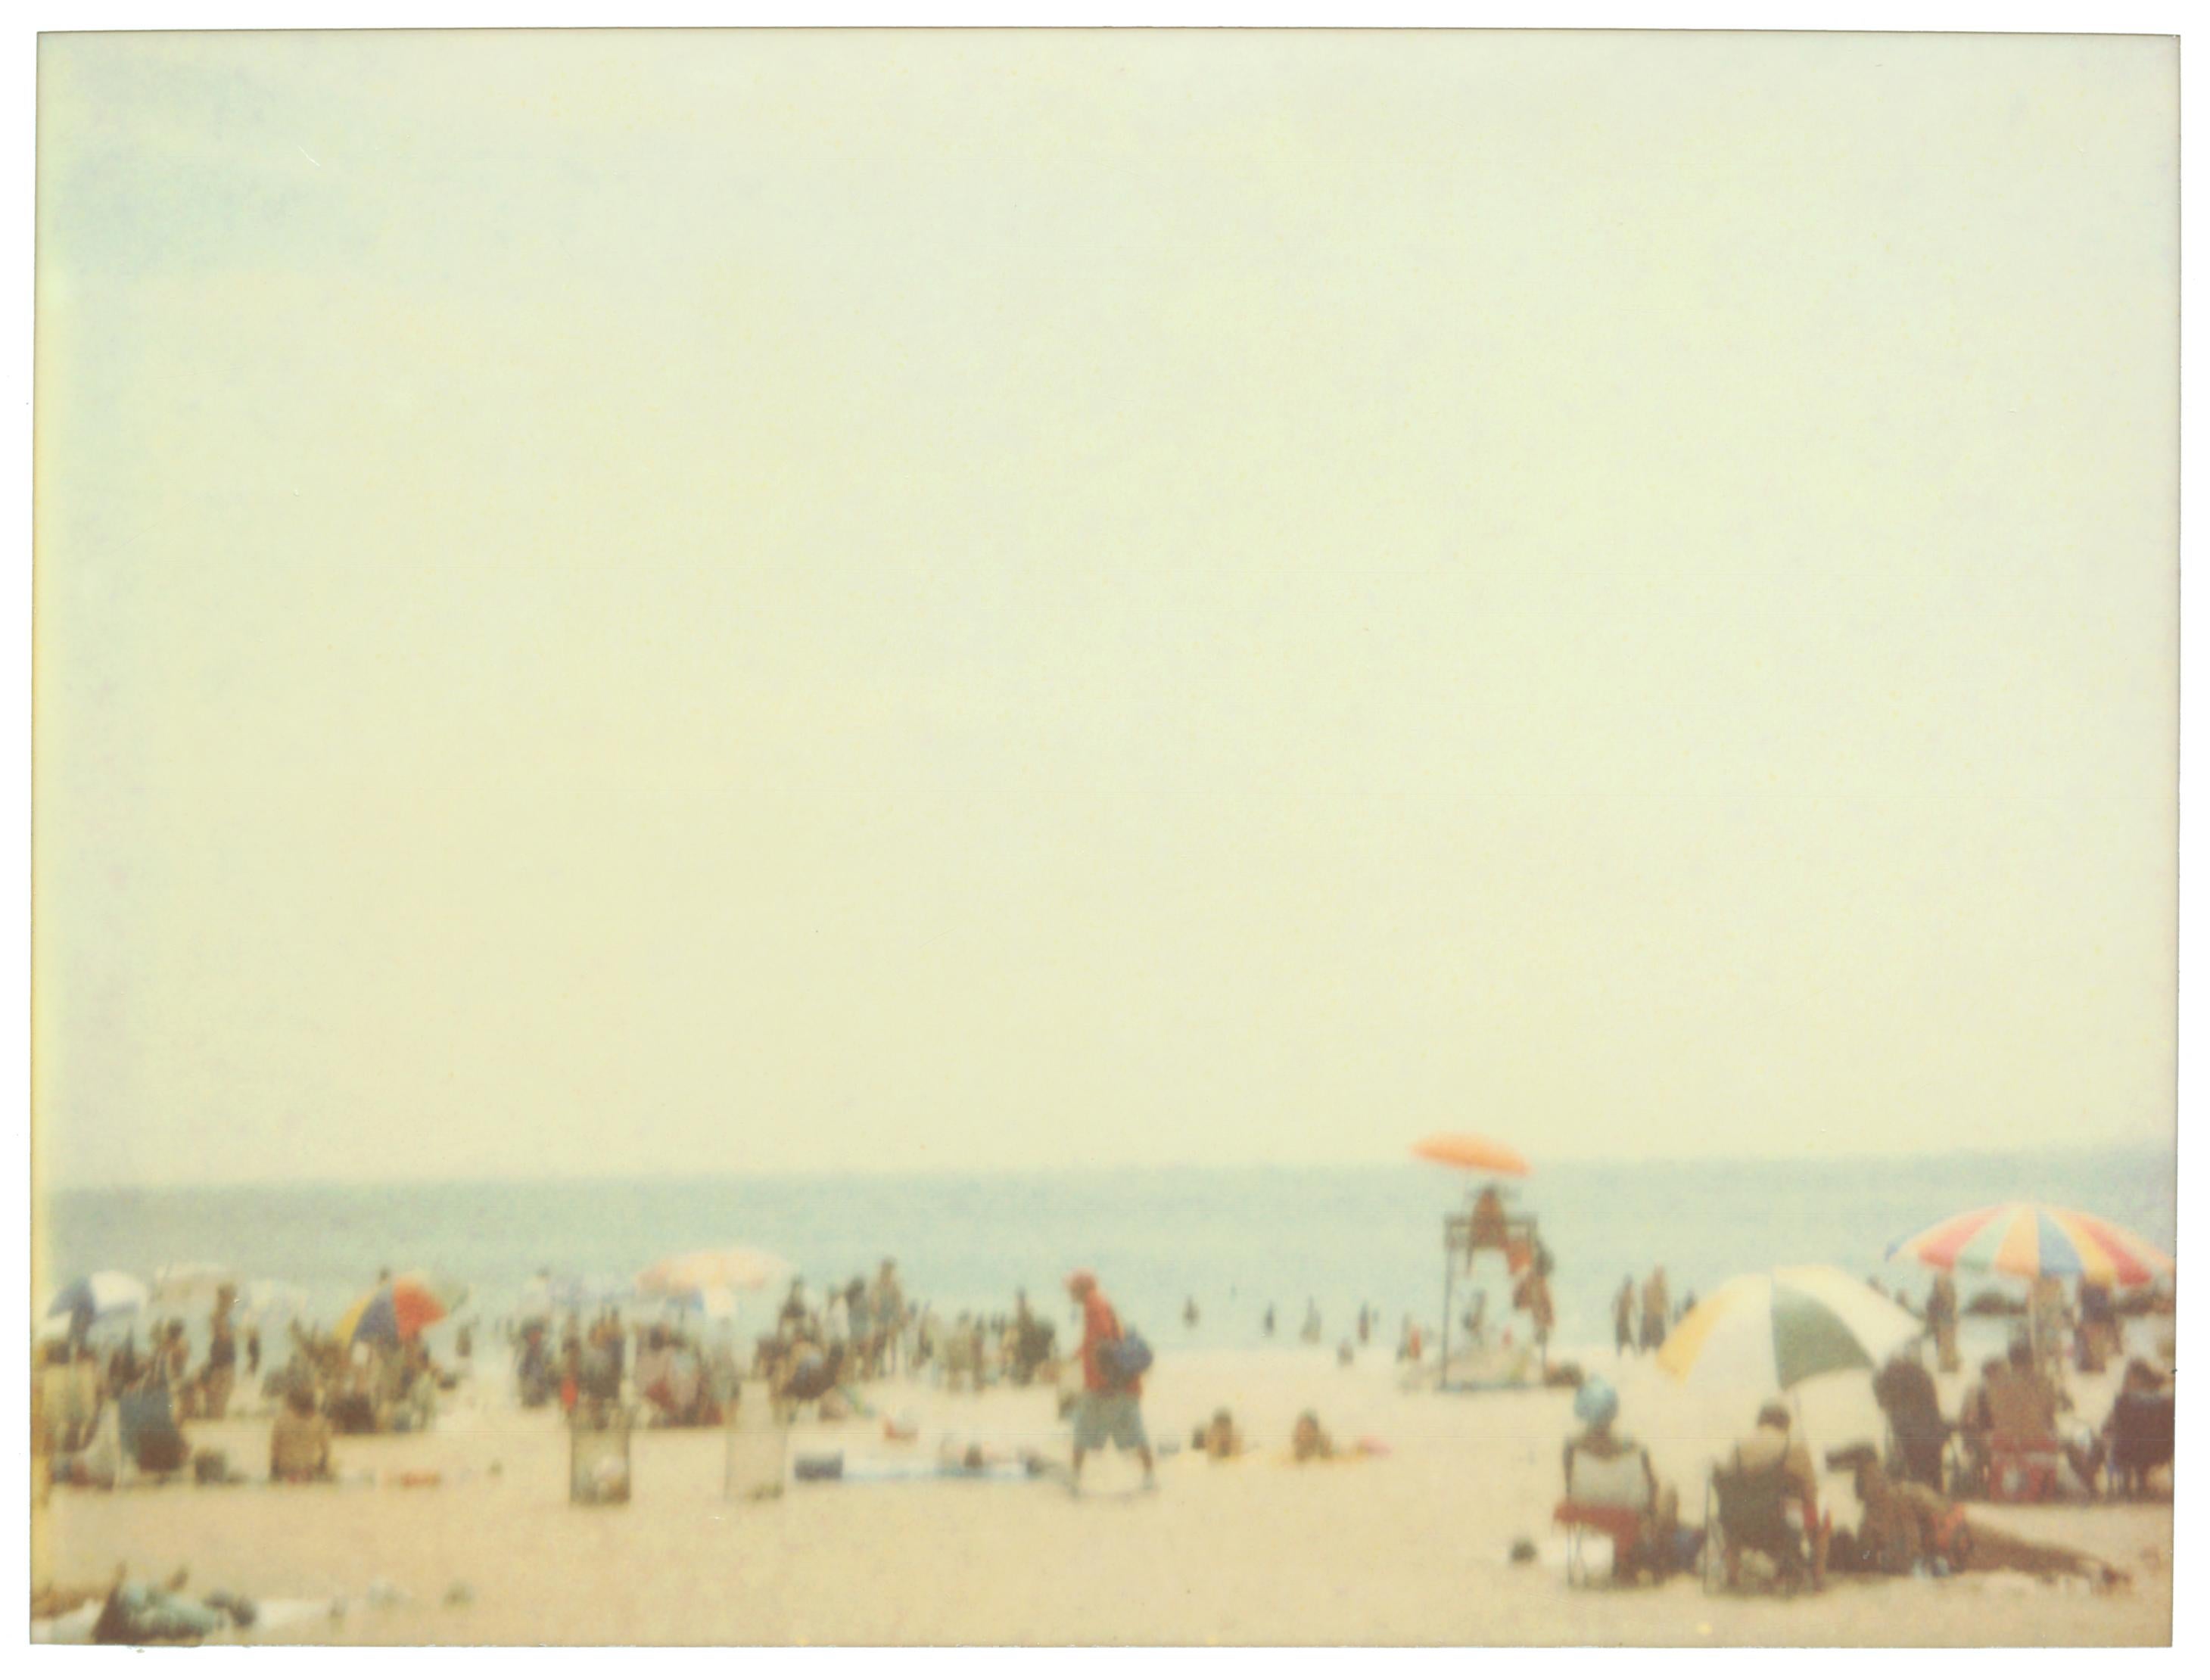 Stefanie Schneider Color Photograph - Coney Island Beach Life (Stay) - Polaroid, 21st Century, Contemporary, Color